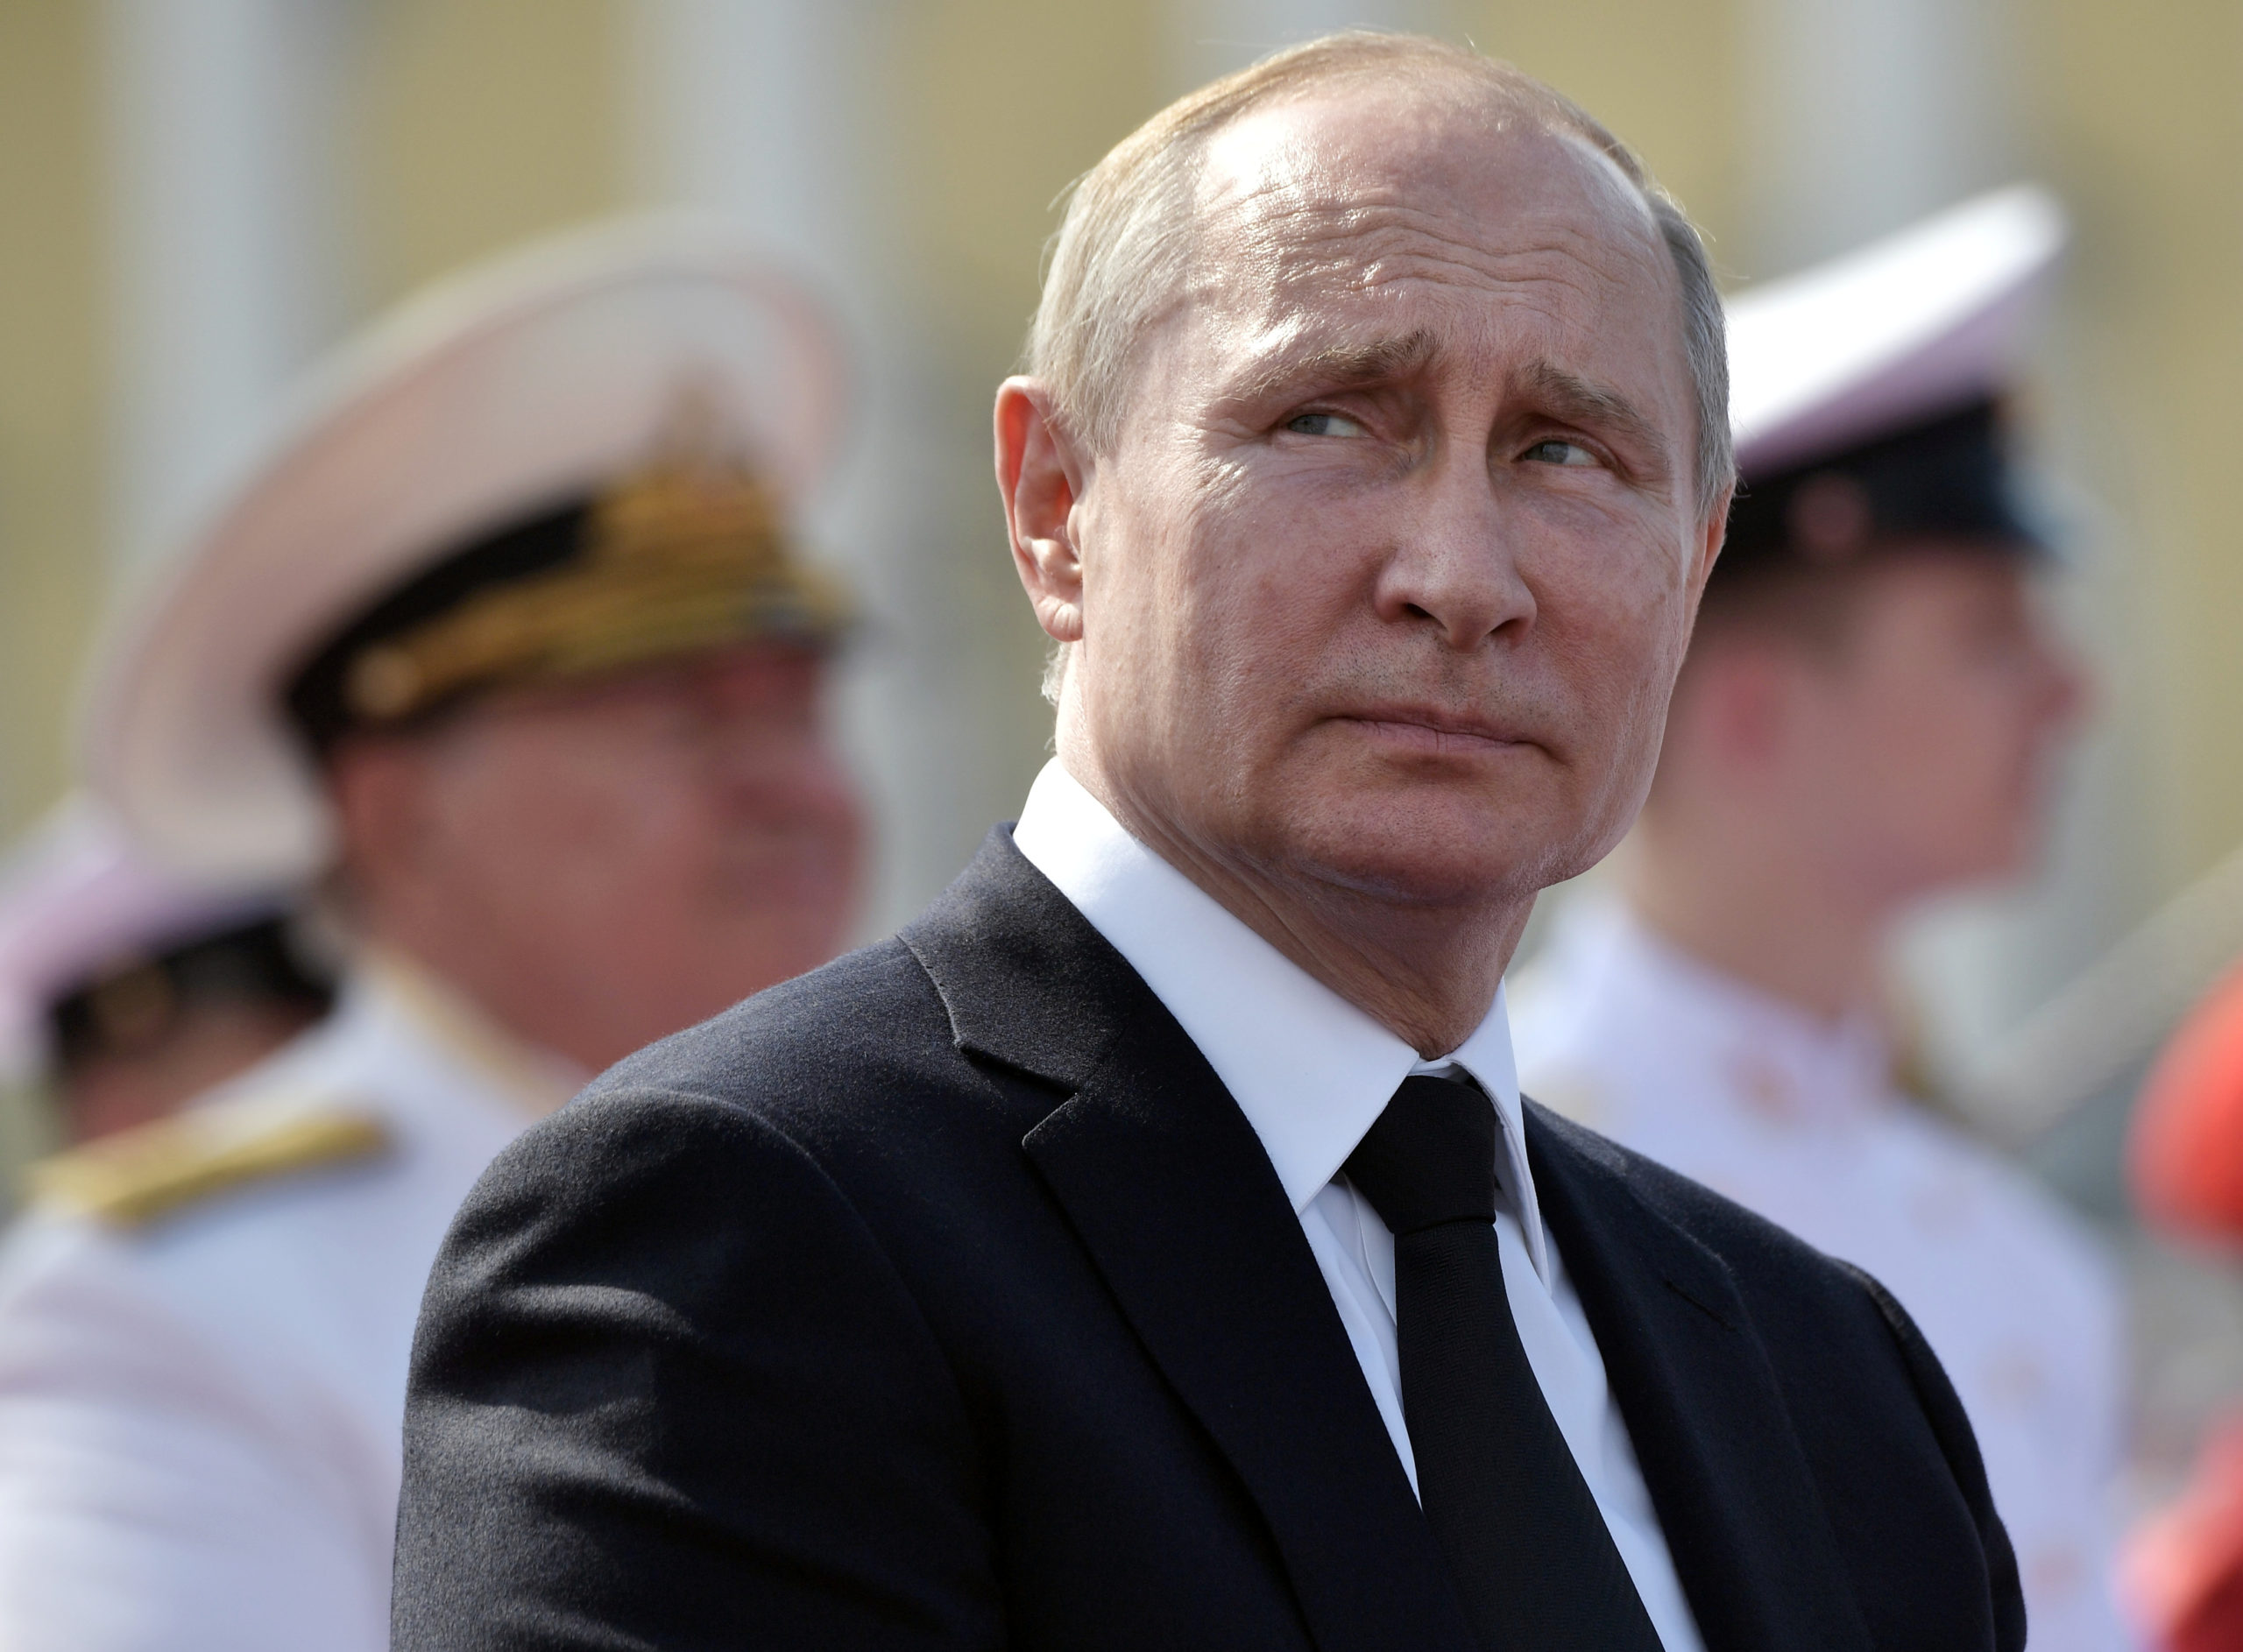 Presidente da Rússia, Vladimir Putin, assiste a parada militar em São Petersburgo
28/07/2019
Sputnik/Aleksey Nikolskyi/Kremlin via REUTERS